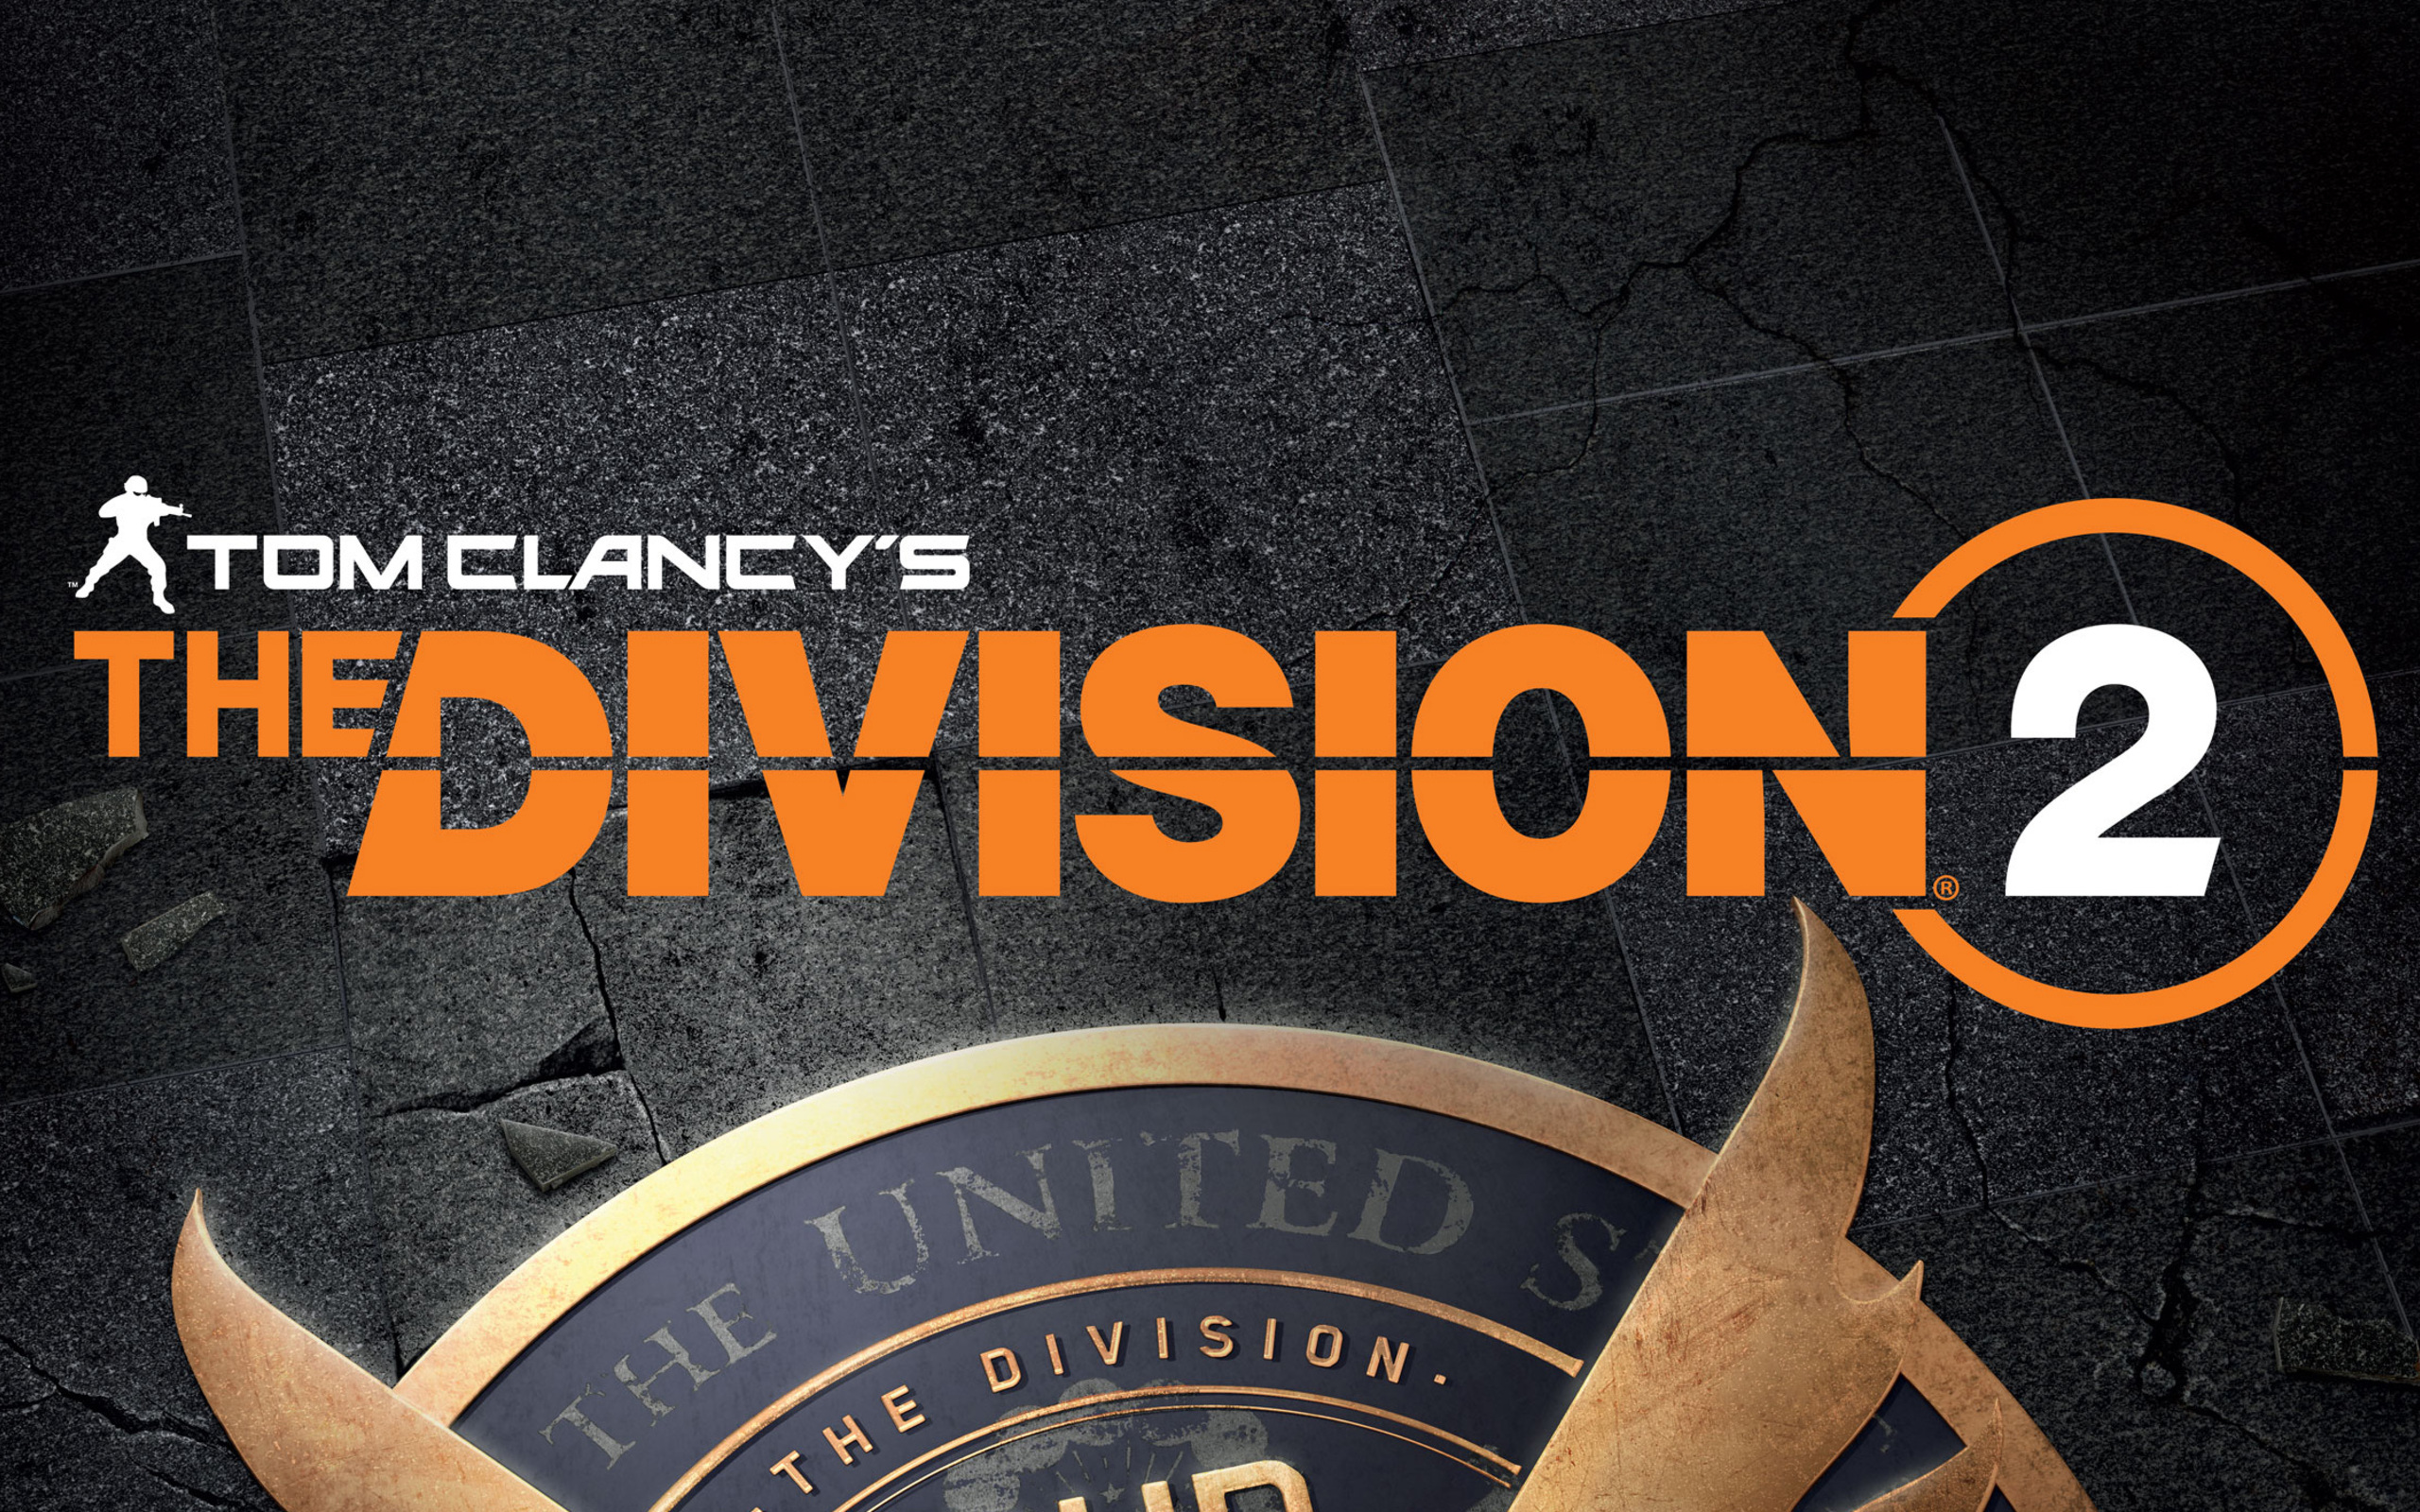 tom-clancys-the-division-2-logo-00.jpg